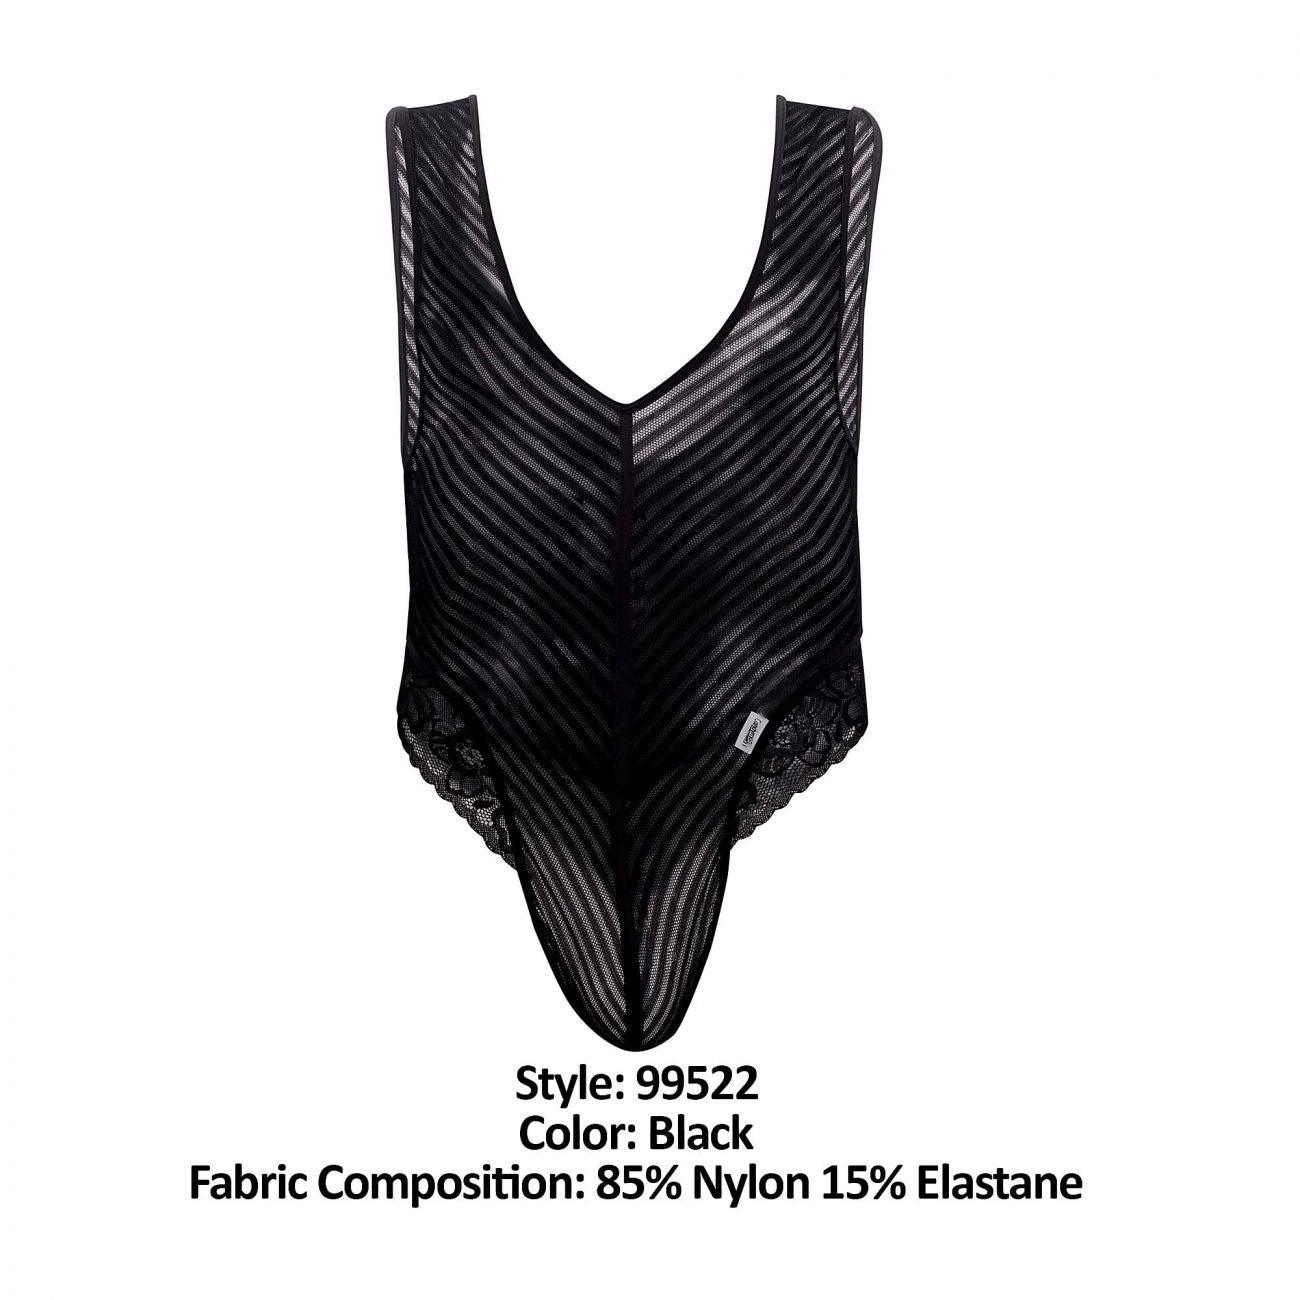 image of product,Lace-Mesh Bodysuit Thong - SEXYEONE